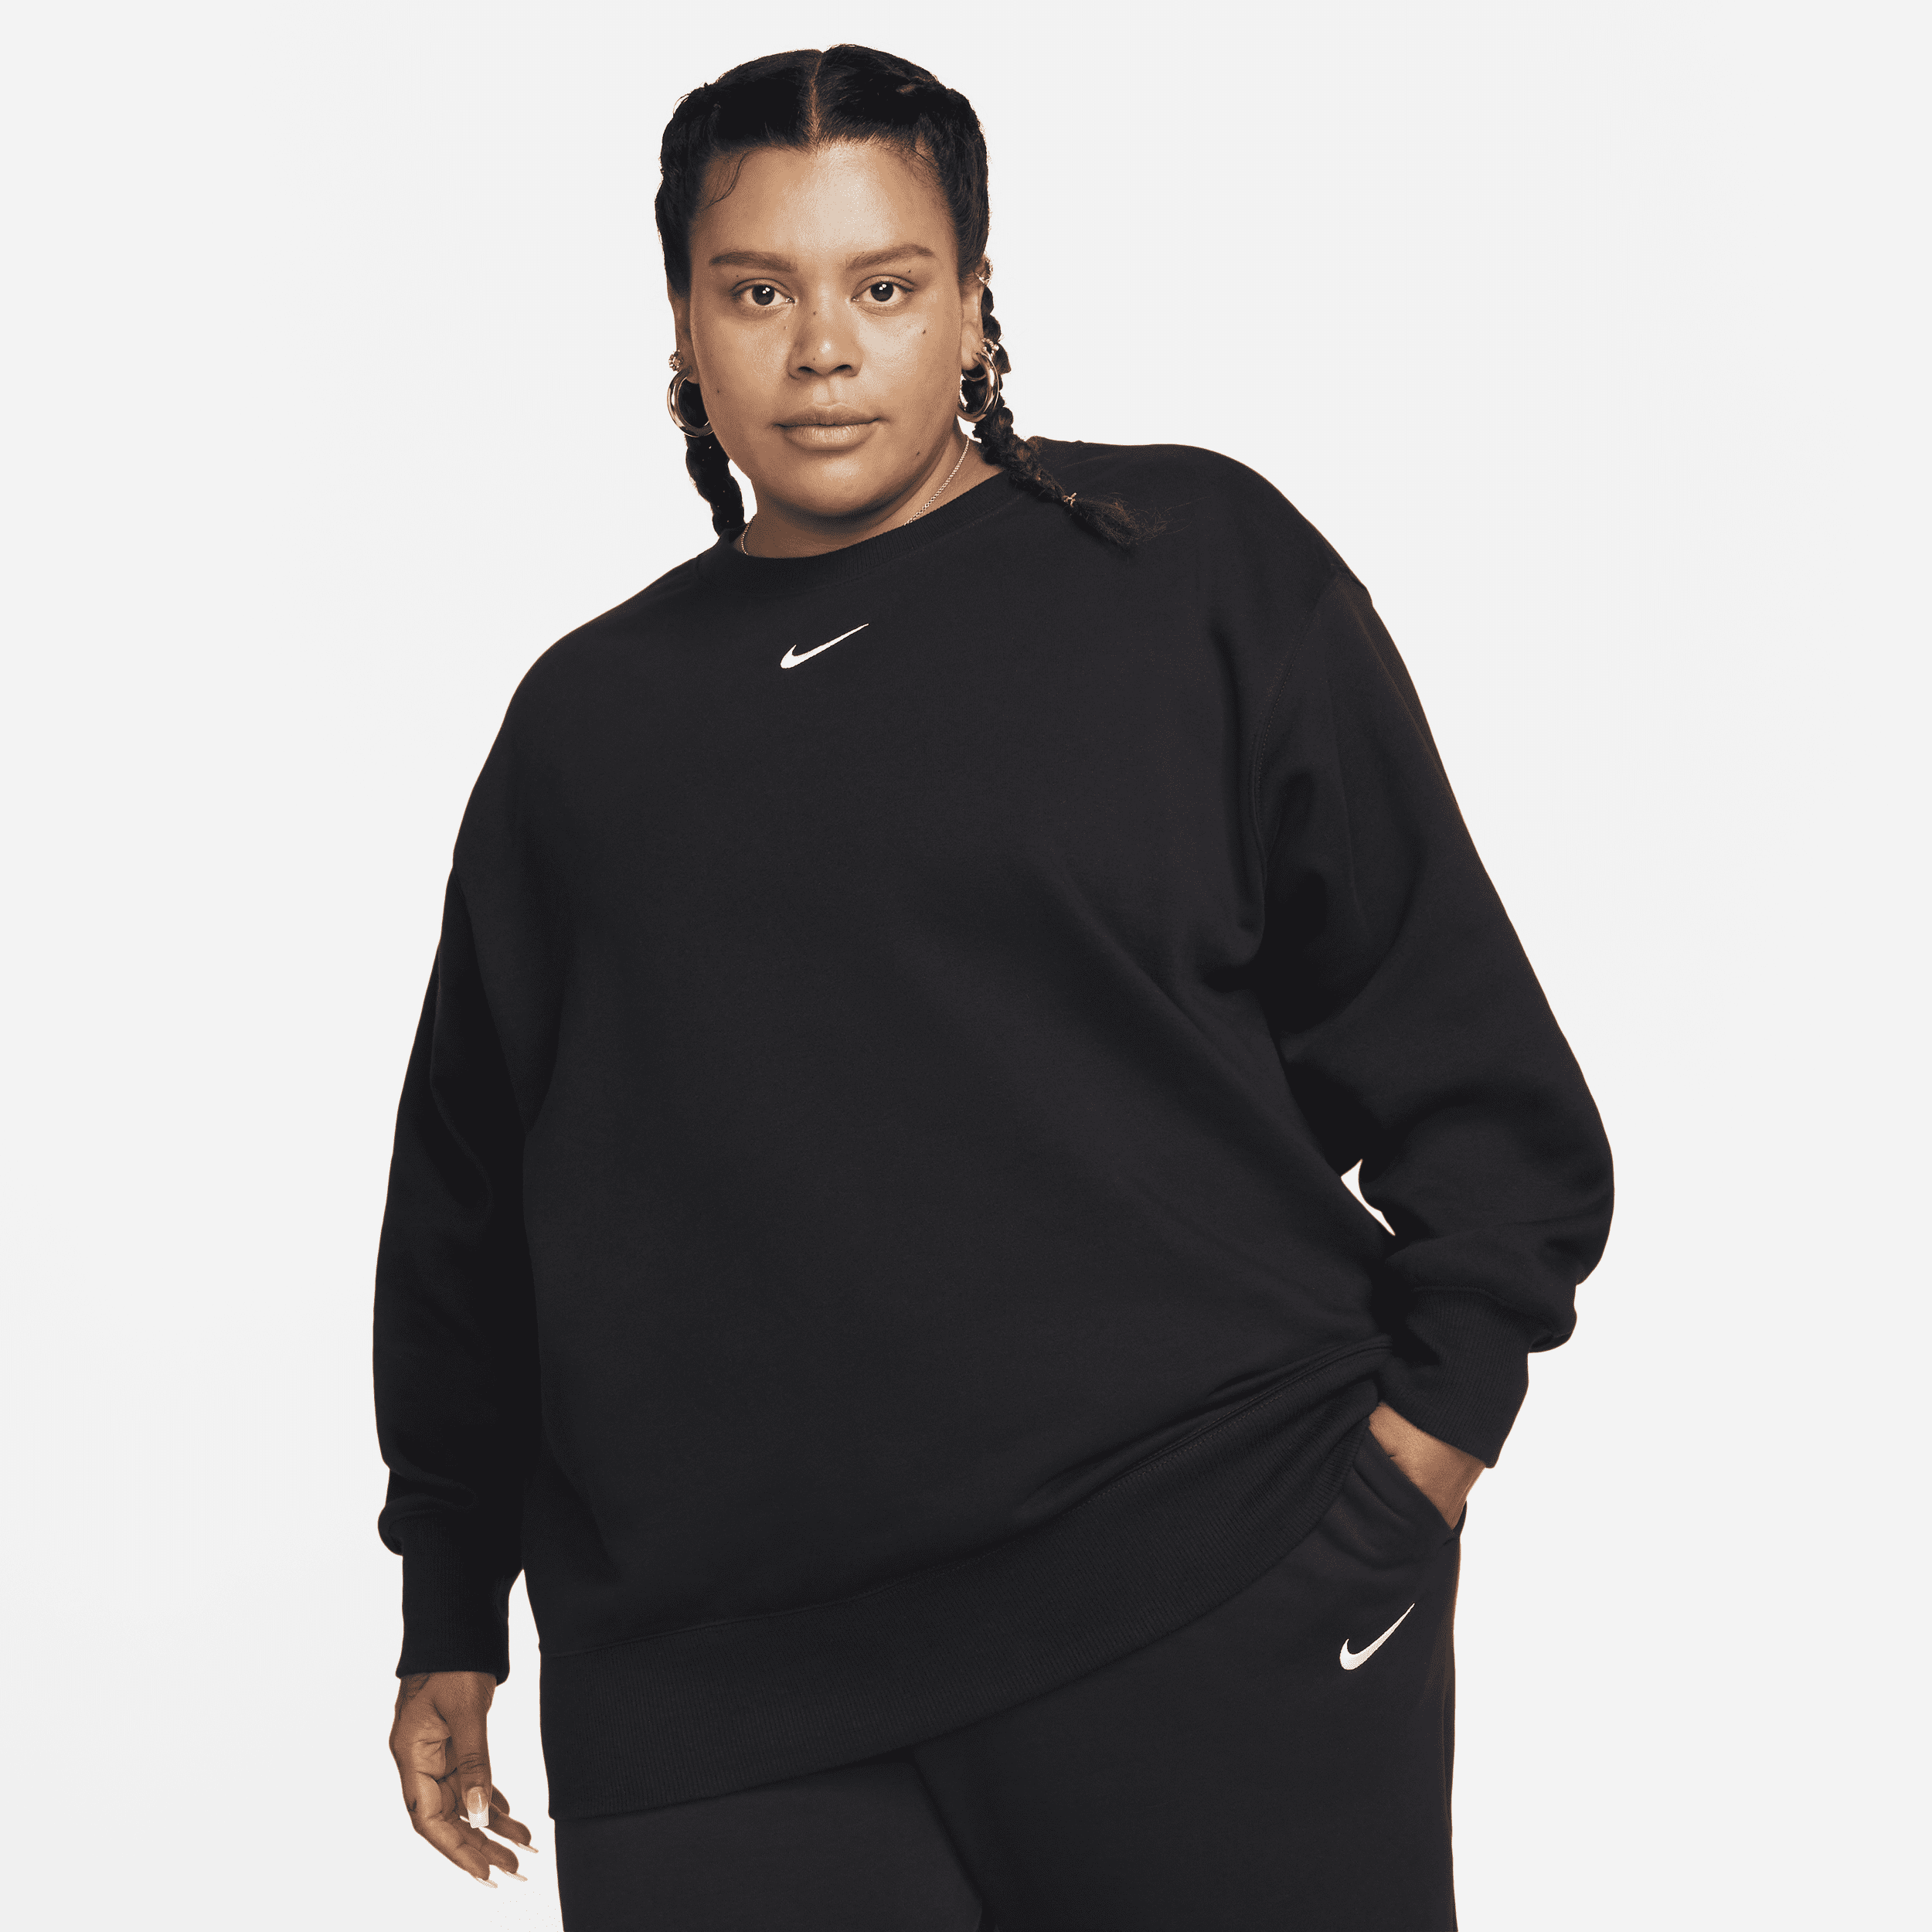 Oversized Nike Sportswear Phoenix Fleece-sweatshirt (plus size) med rund hals til kvinder - sort